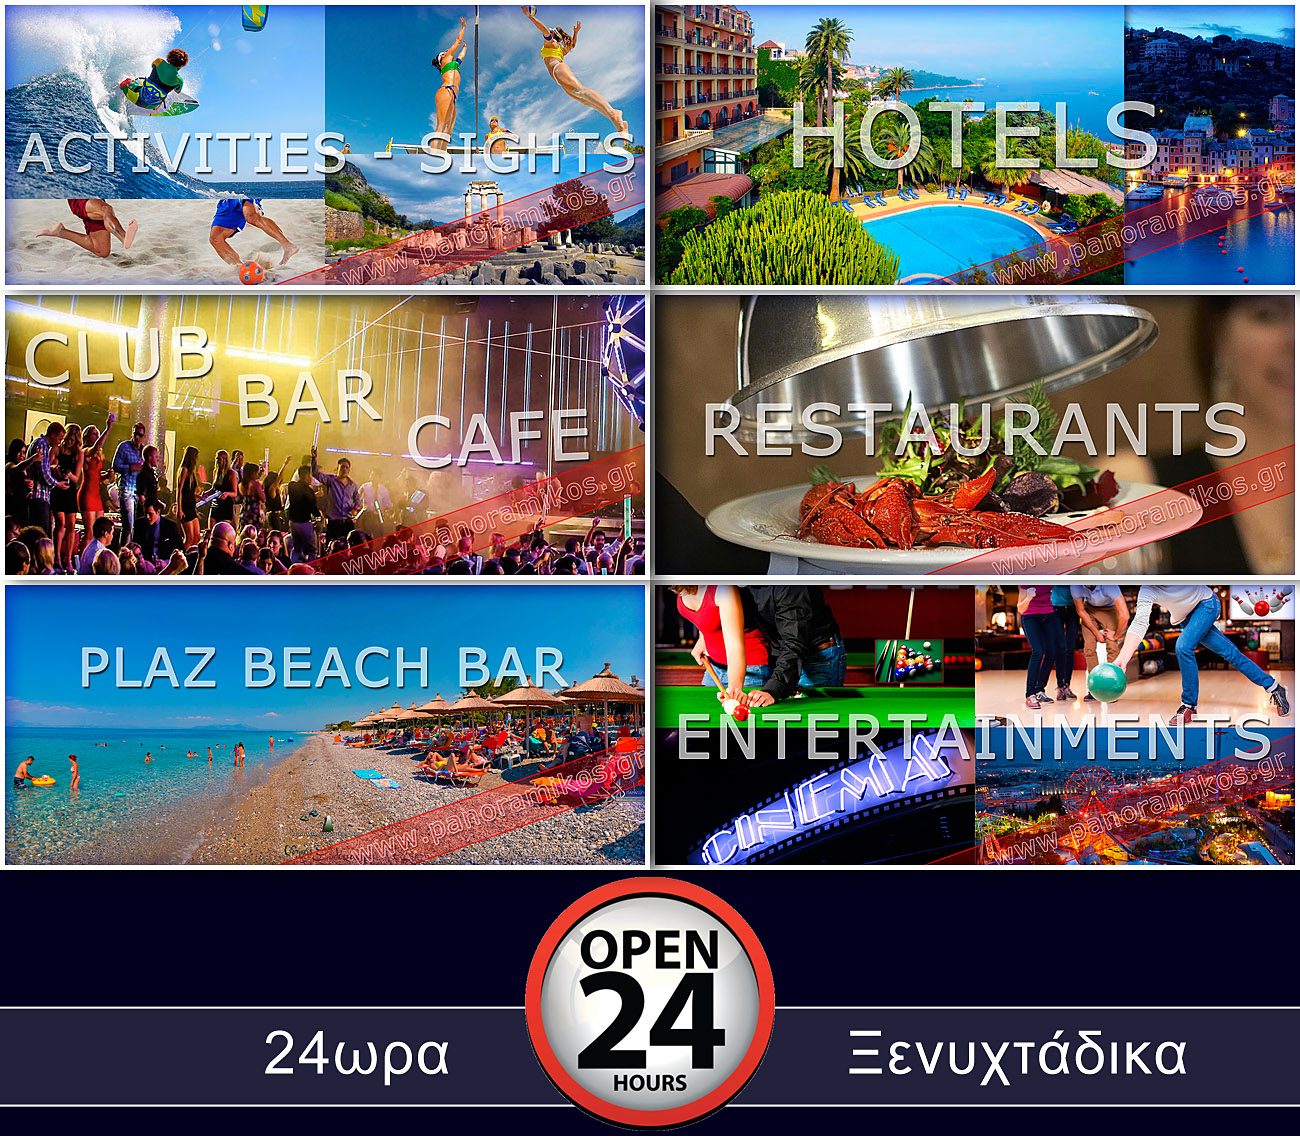 panoramikos.gr - activities, sights, hotels, club, bar, cafe, restaurants, plaz, beach bar, entertainments, games, 24 hours open